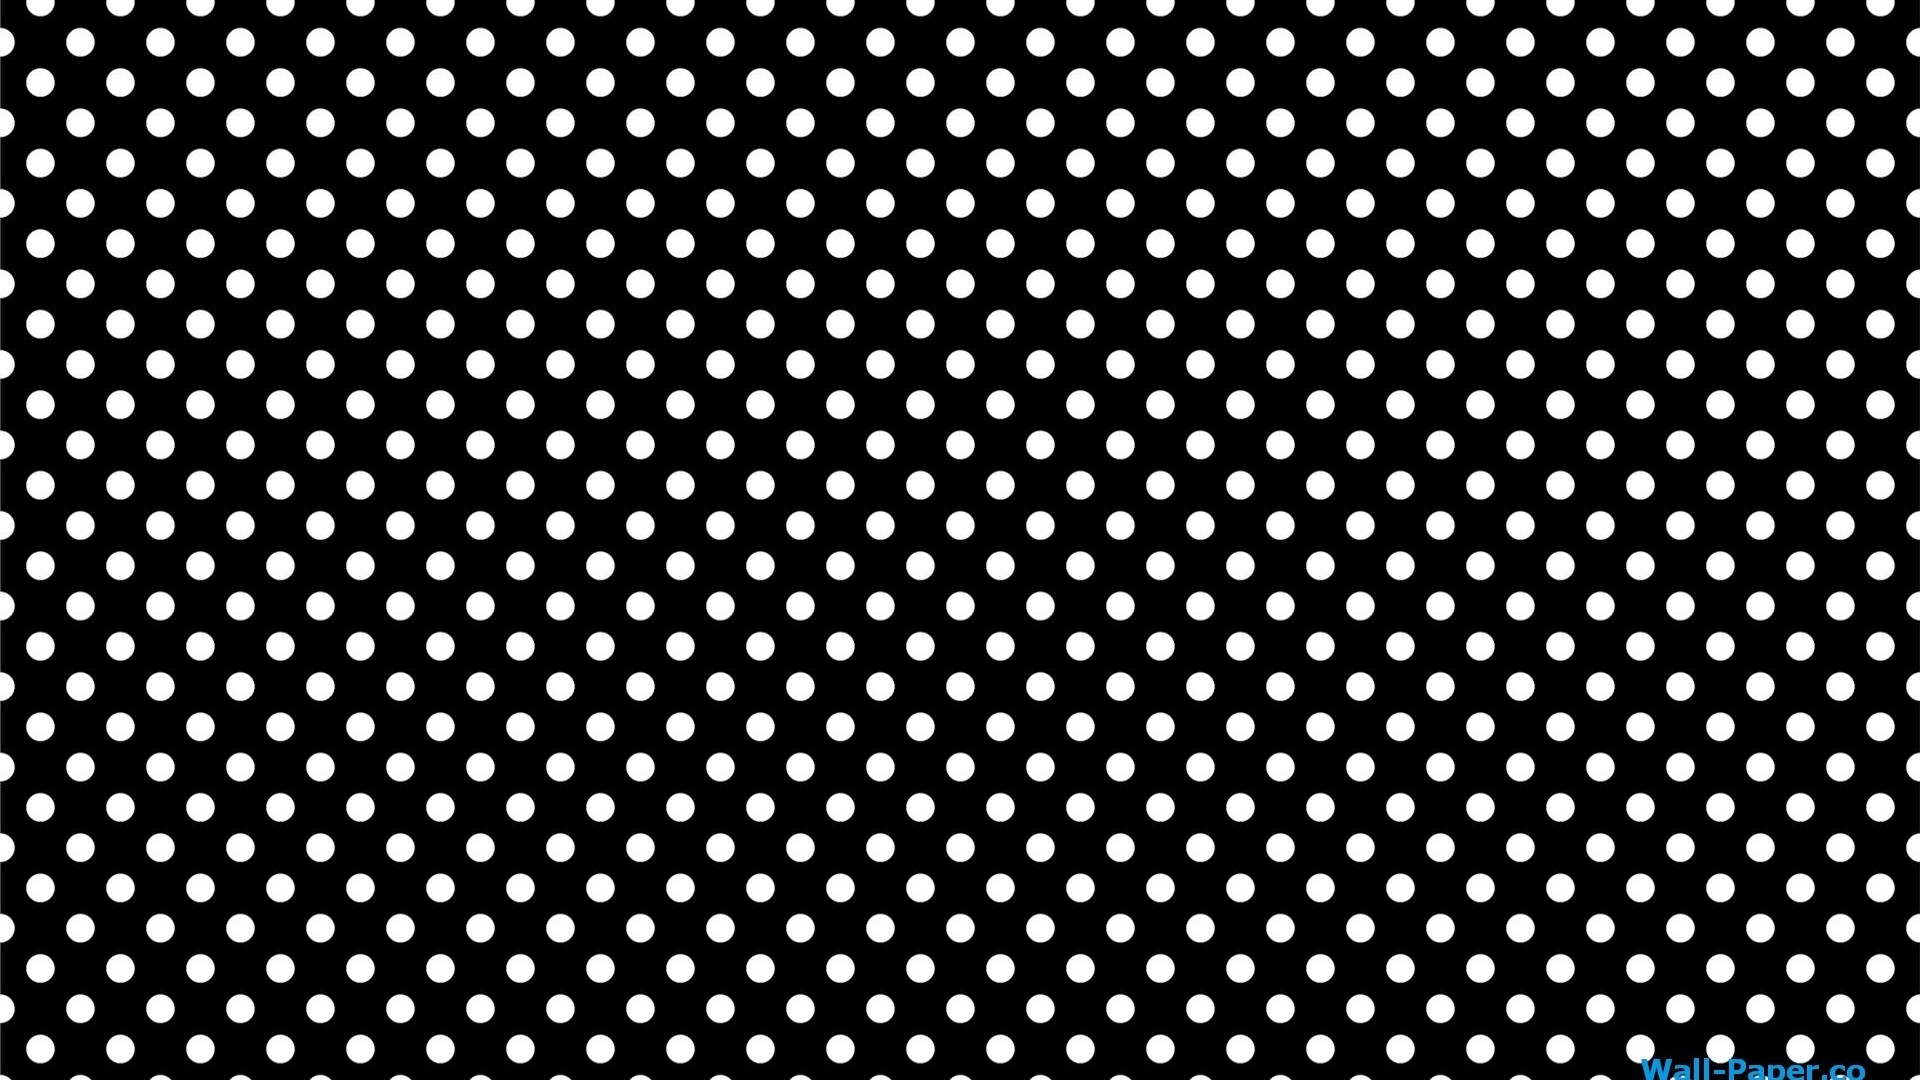 4. Black and White Polka Dot Toe Nail Design - wide 6